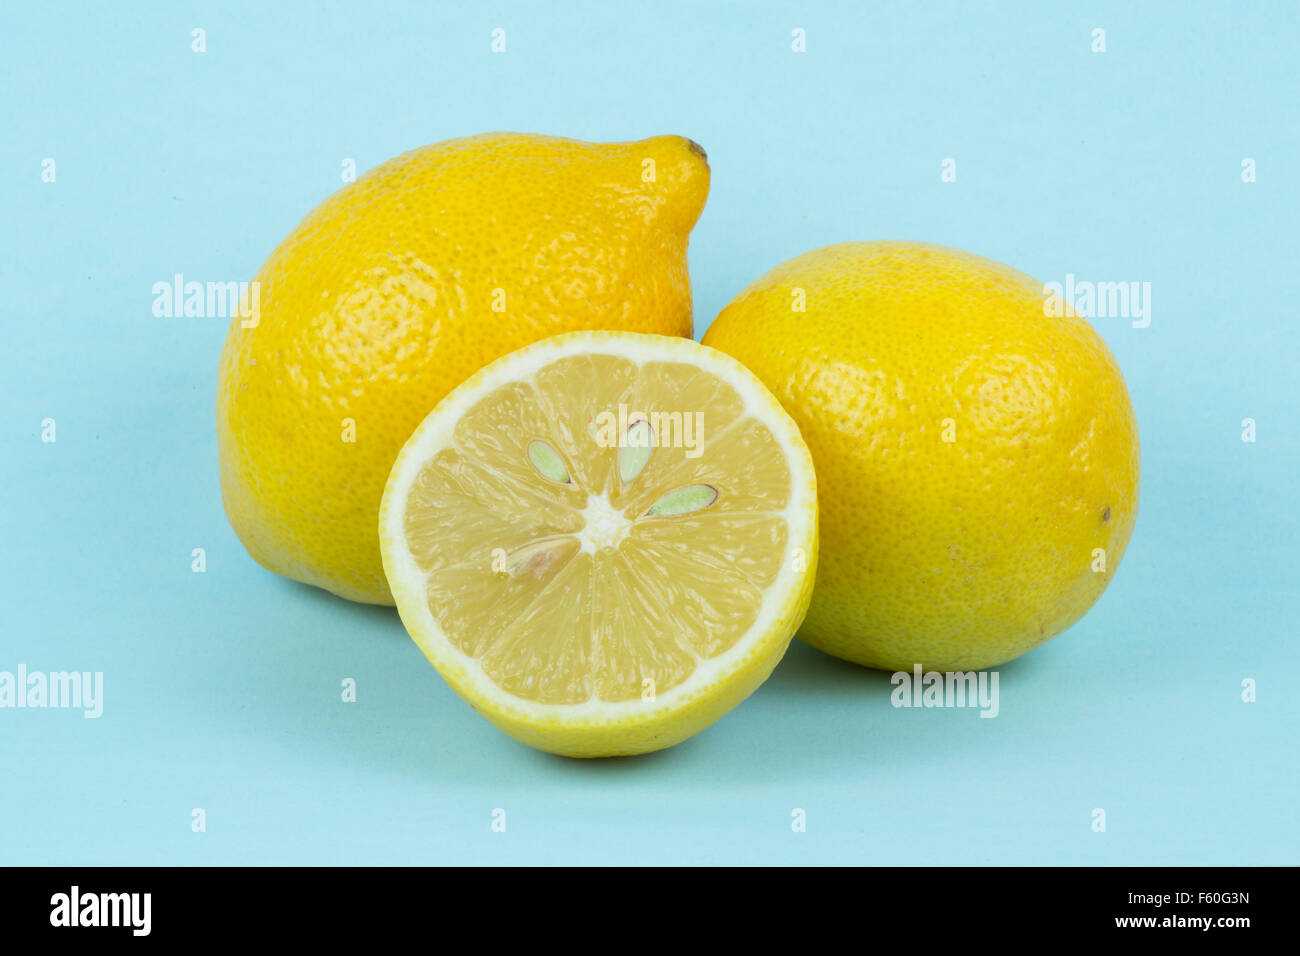 Un montón de limones sobre un fondo azul pálido. Foto de stock